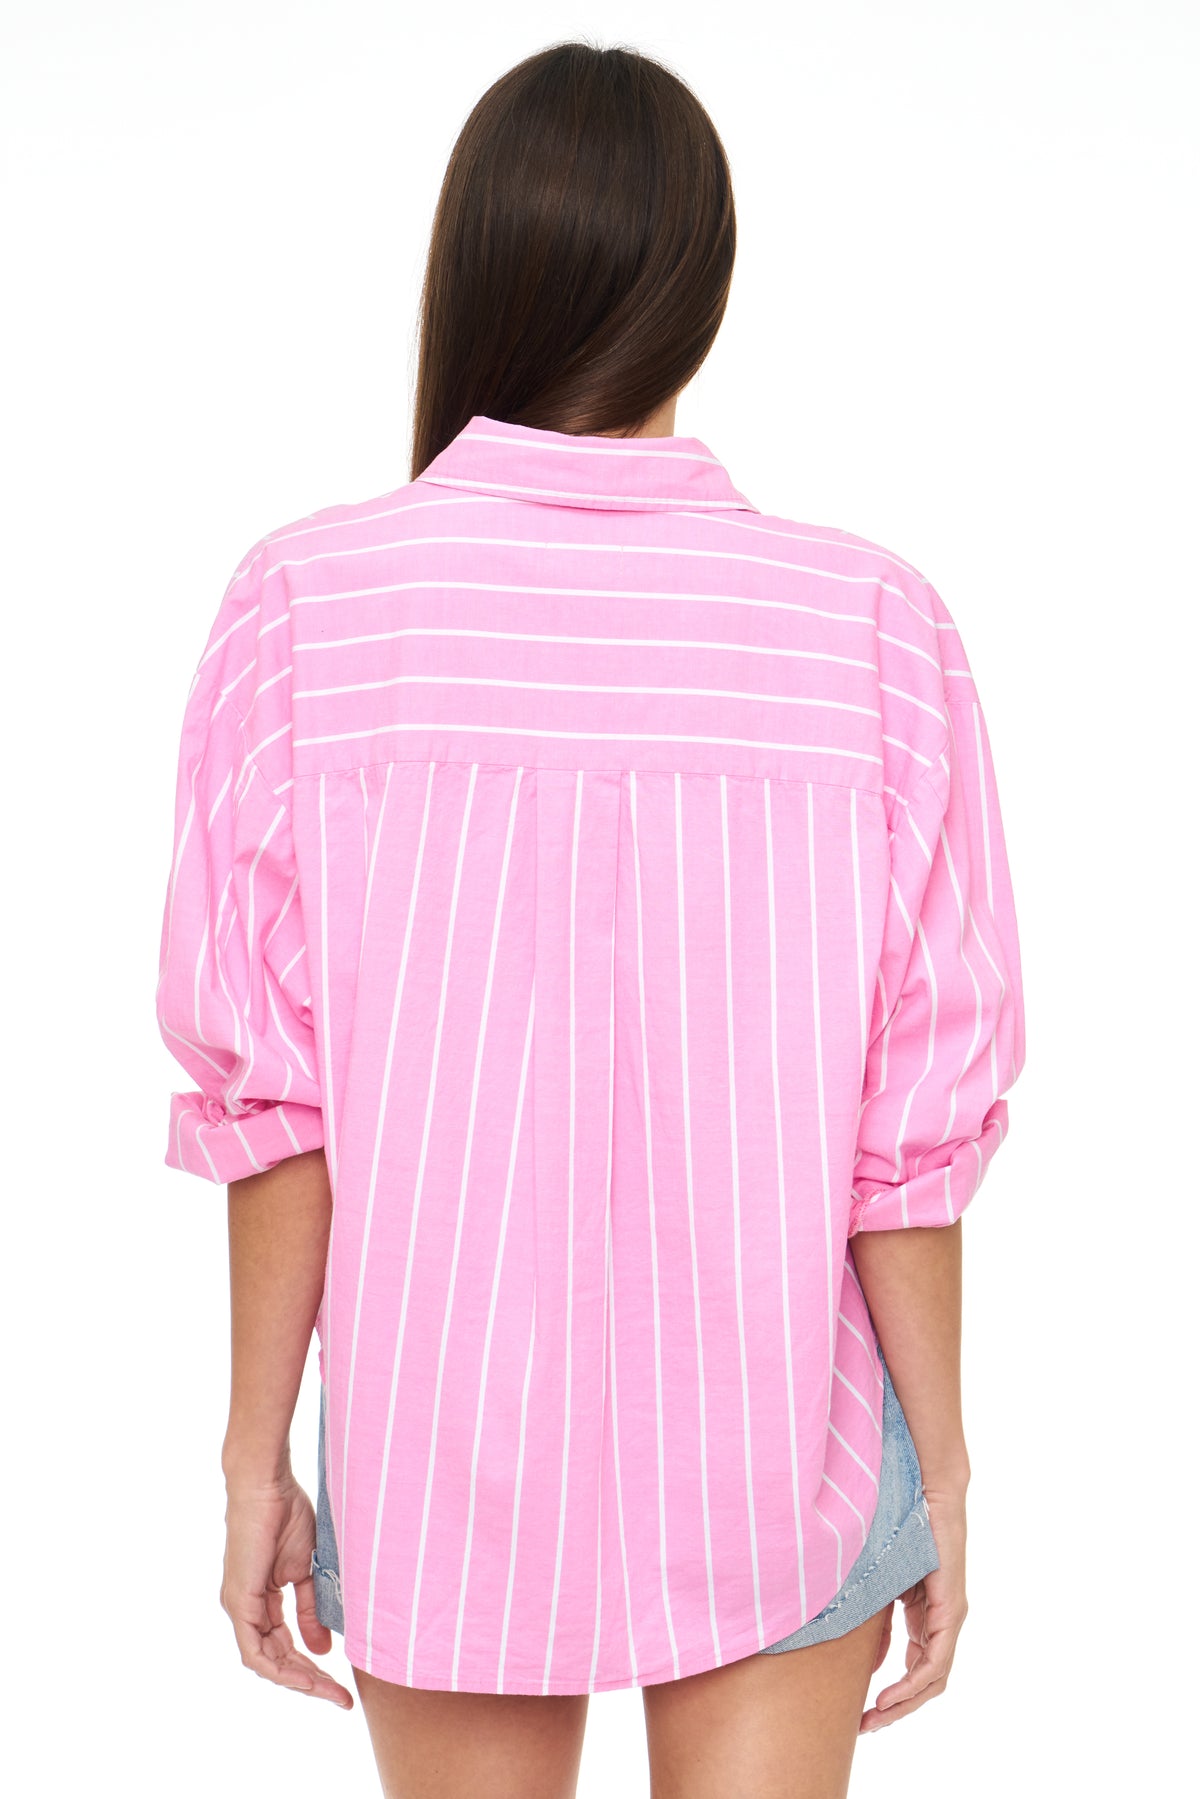 Sloane Oversized Button Down Shirt - Flamingo Stripe